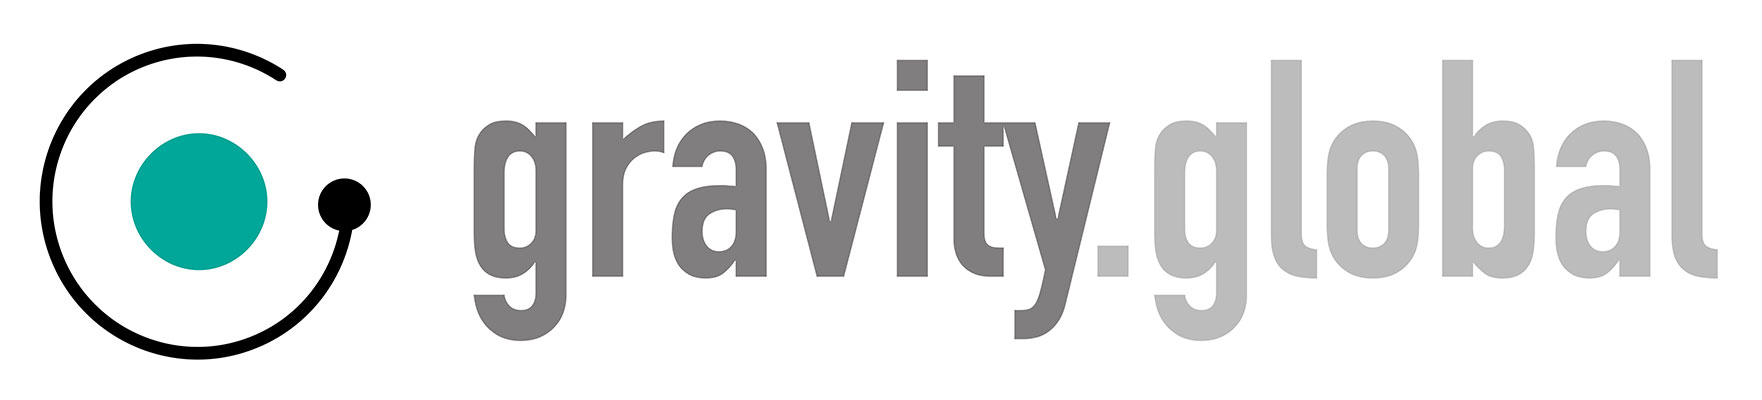 GravityGlobal_Logo.jpg